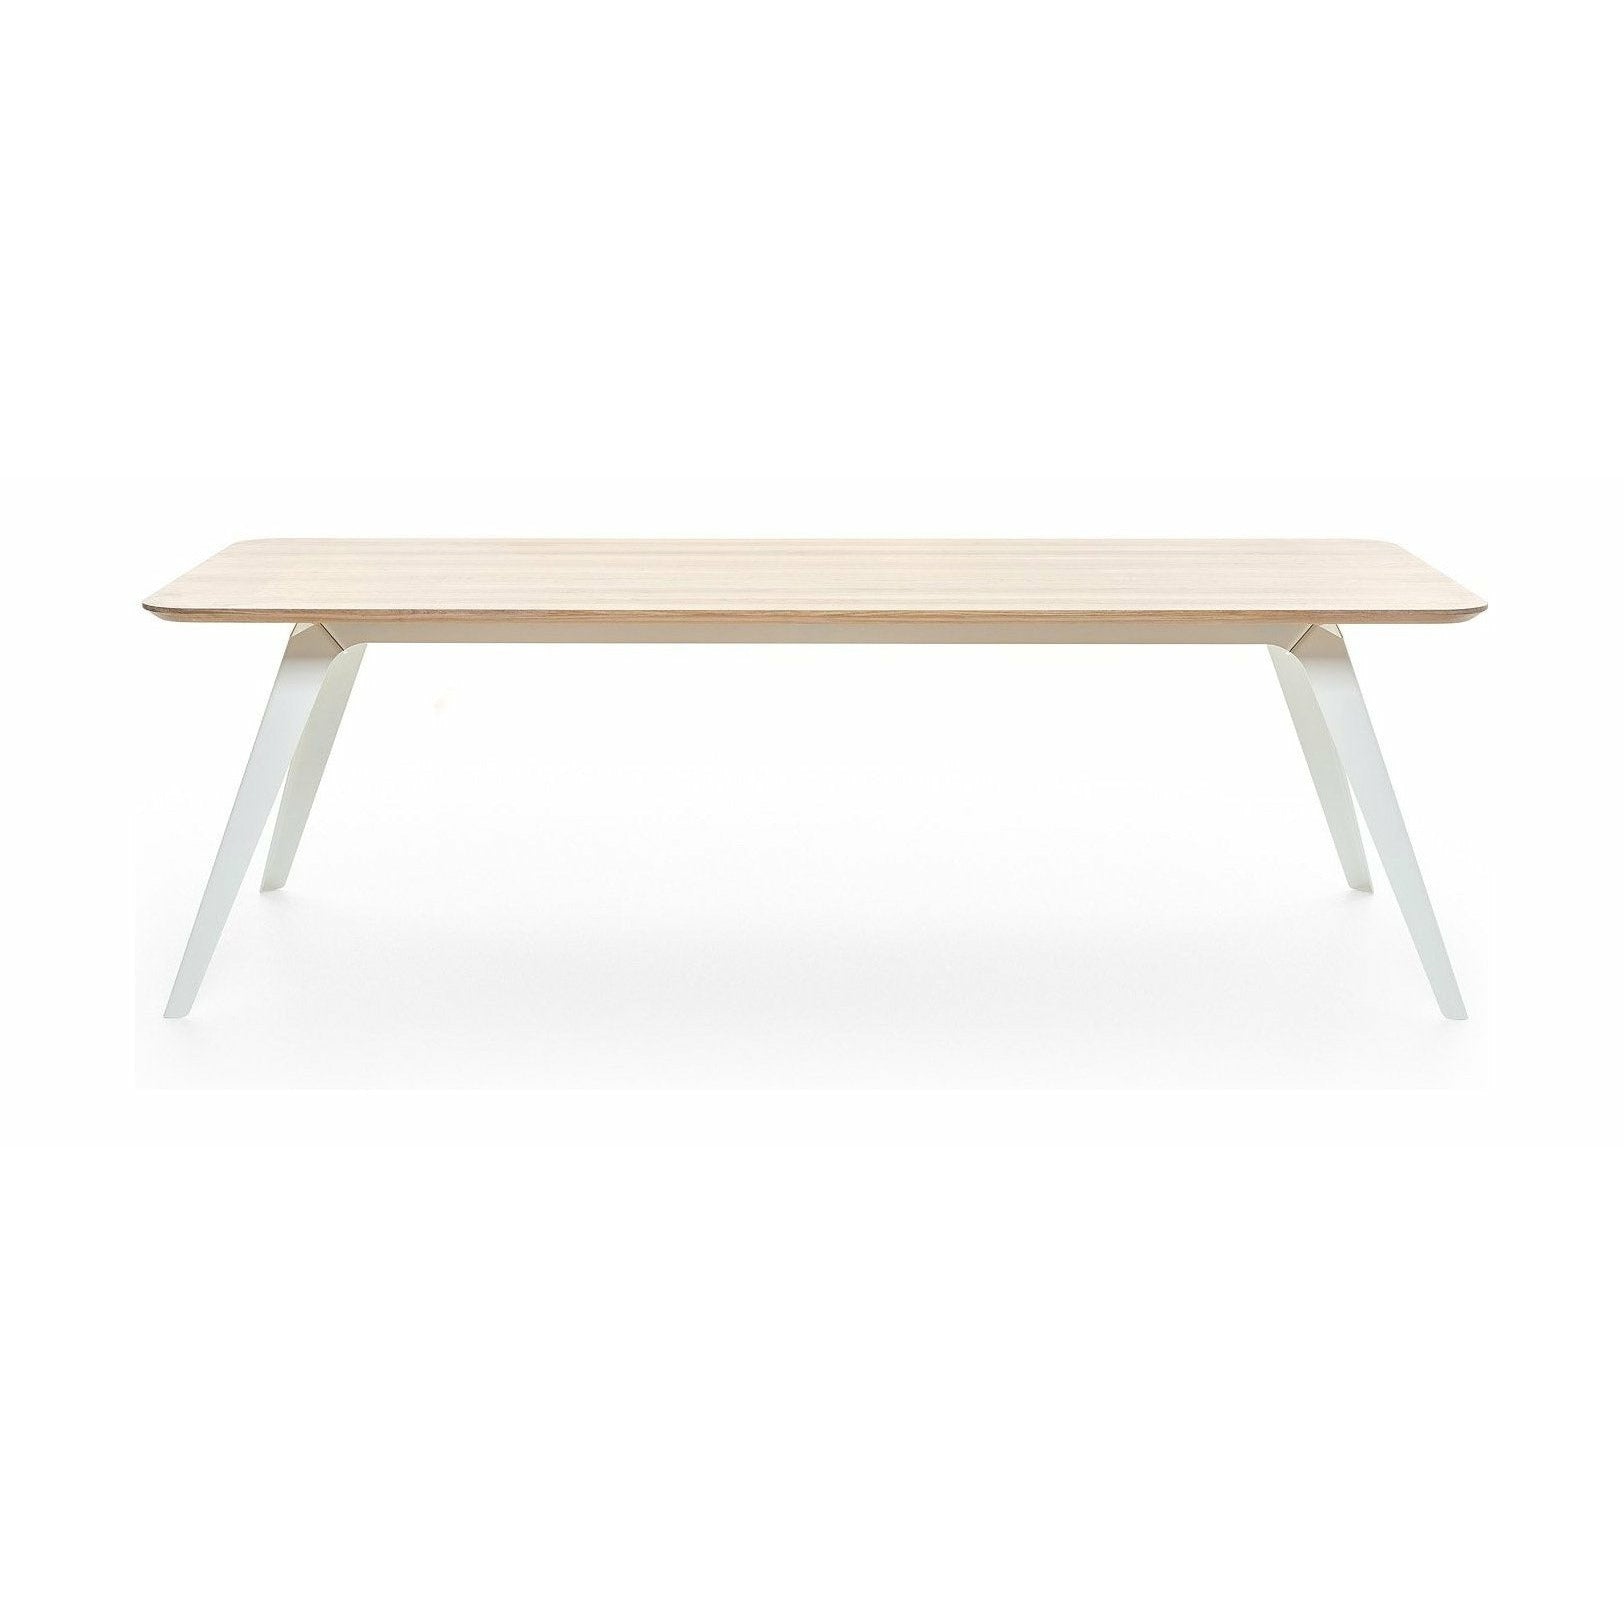 Puik Fold Table jadalny 200x95 cm, White / Naturel